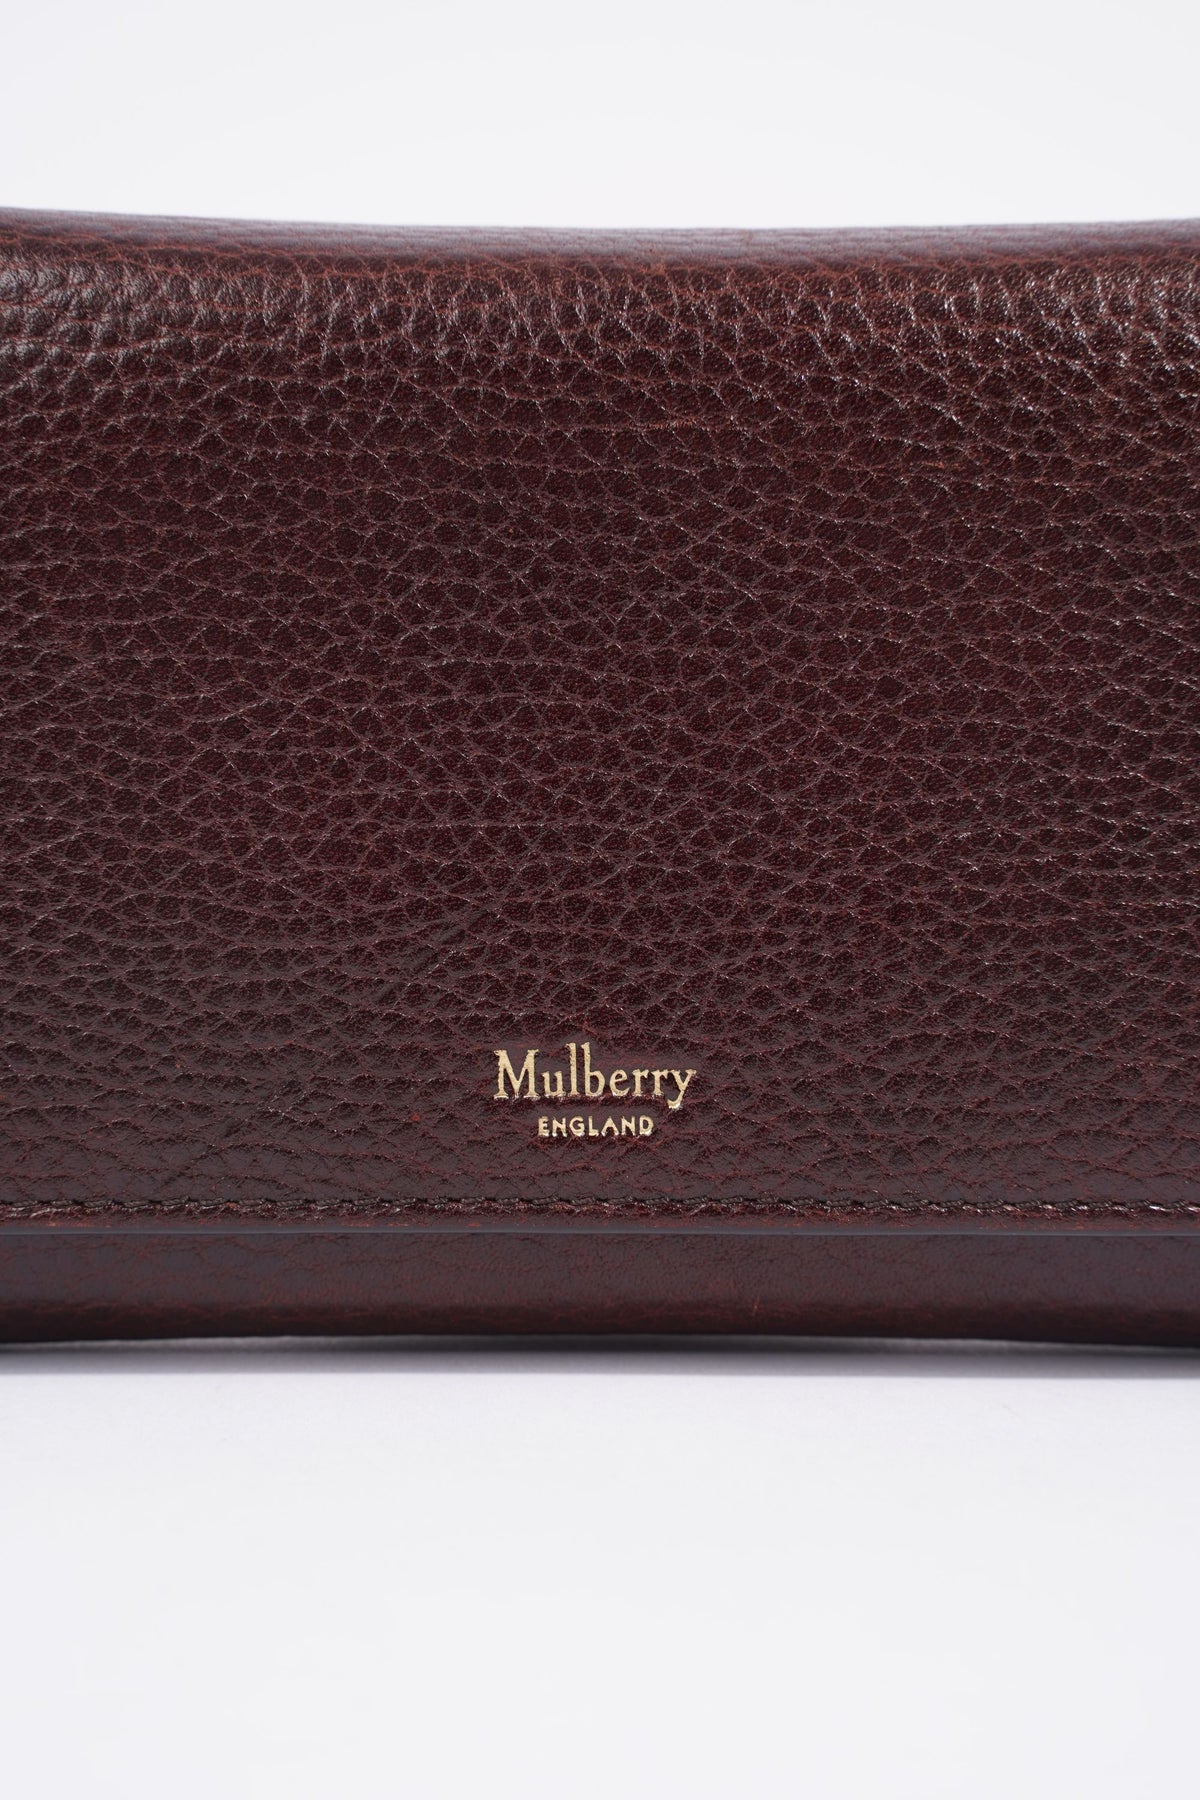 Mulberry Amberley Satchel- Oxblood Large | eBay